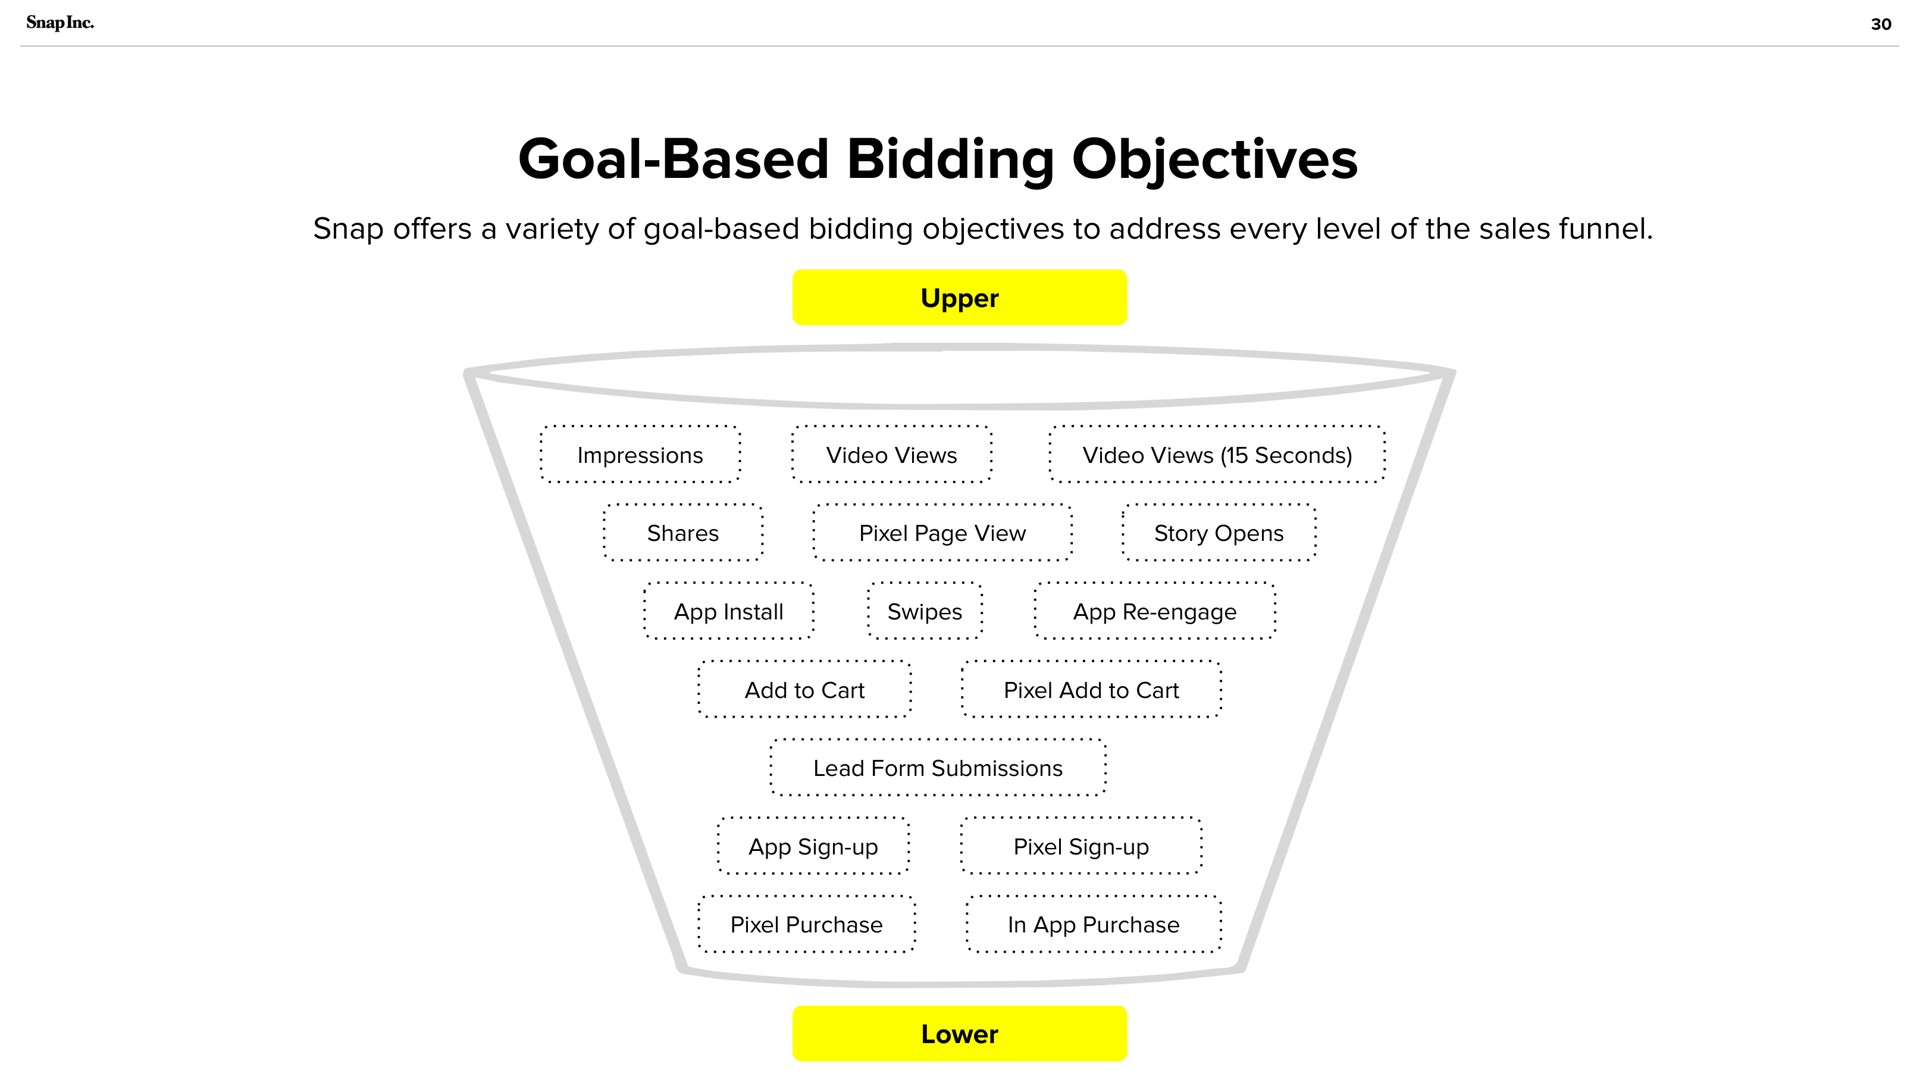 goal based bidding objectives | Snap Inc